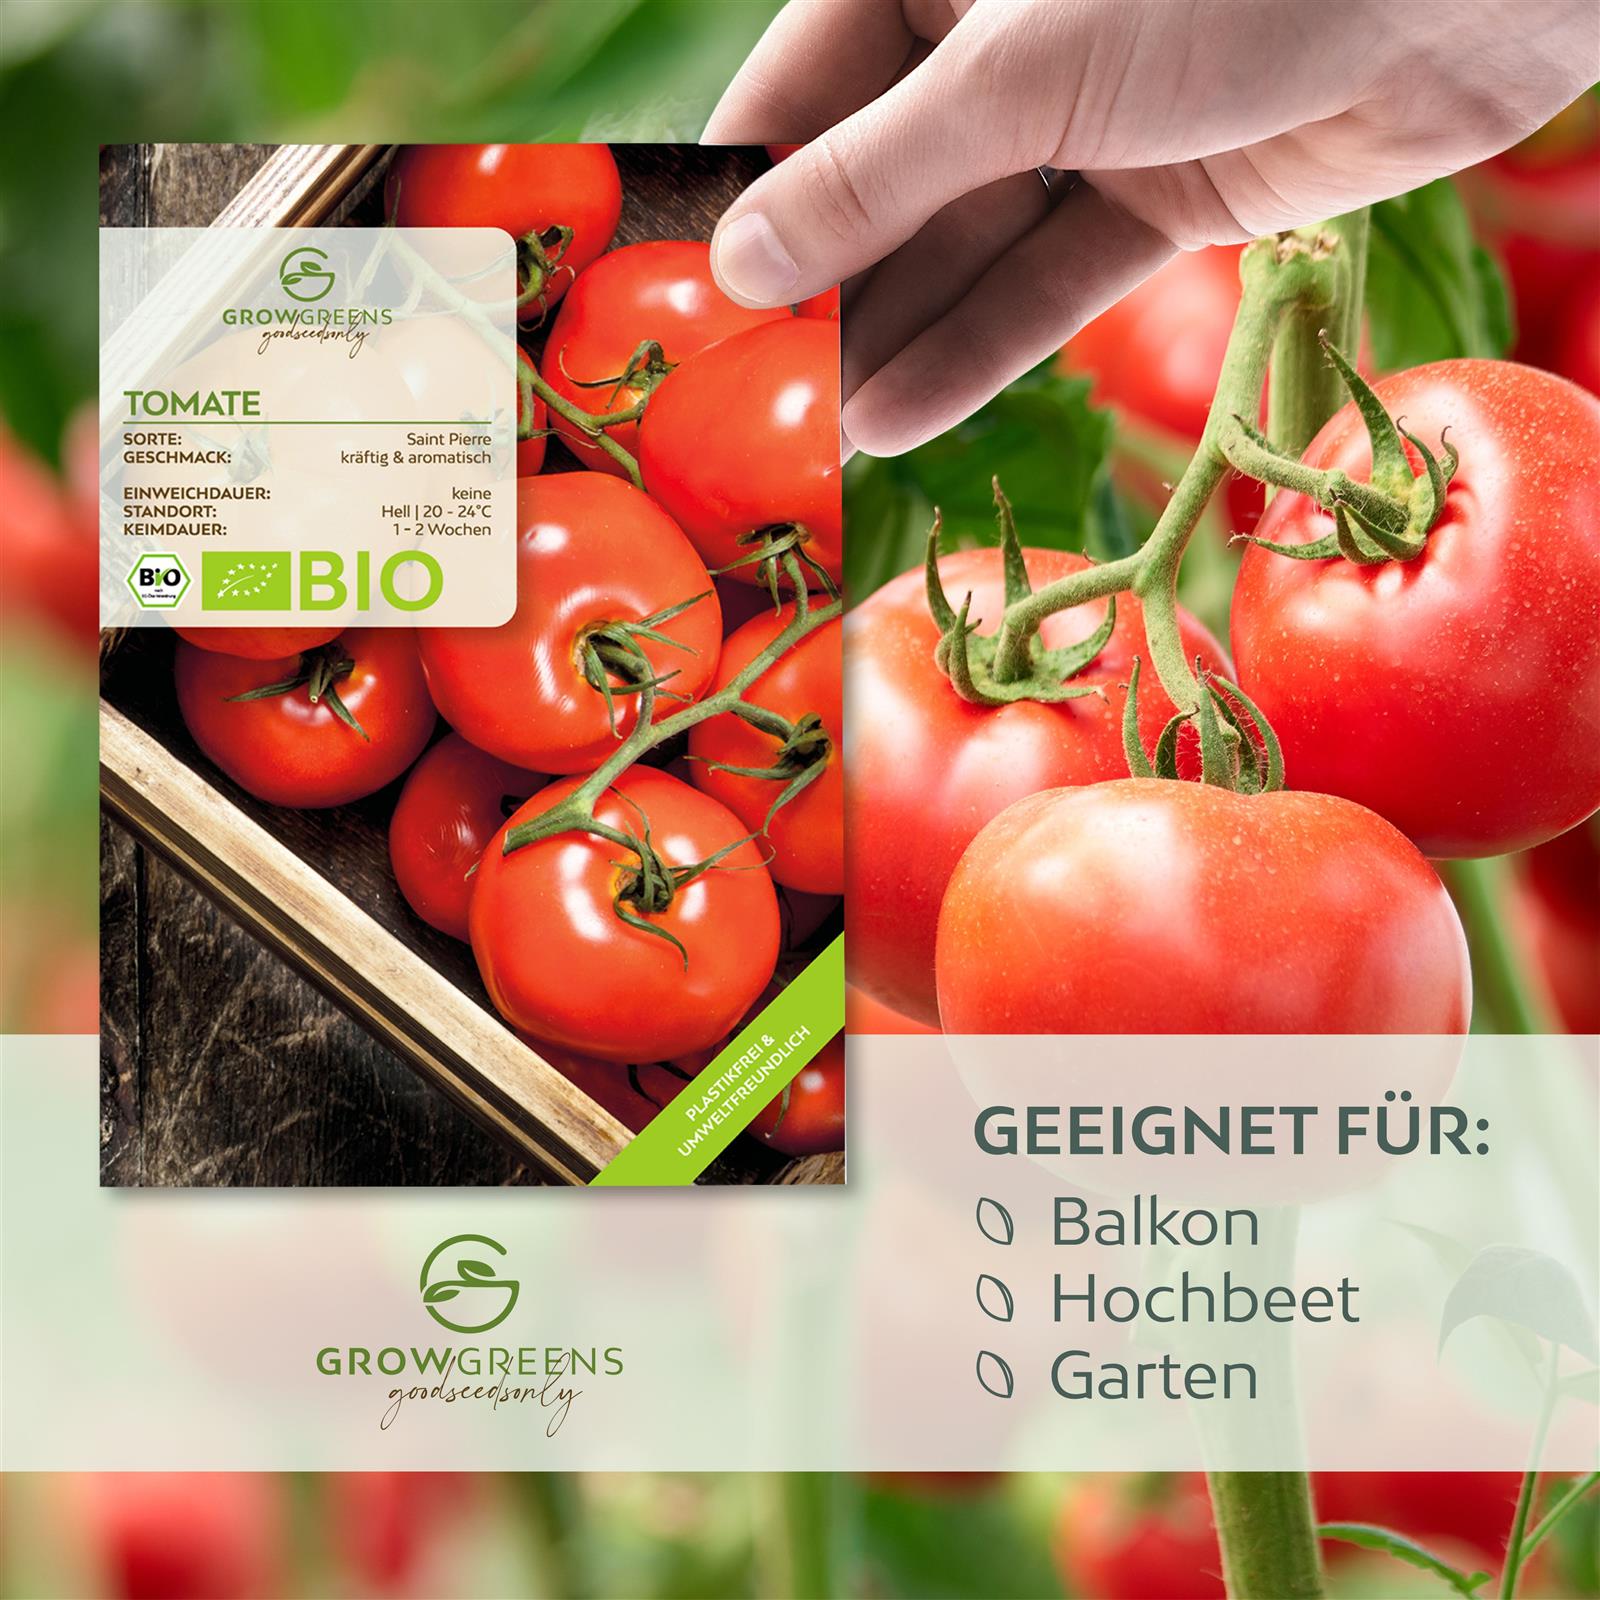 BIO Tomatensamen (Saint Pierre) - Tomaten Saatgut aus biologischem Anbau (10 Korn)